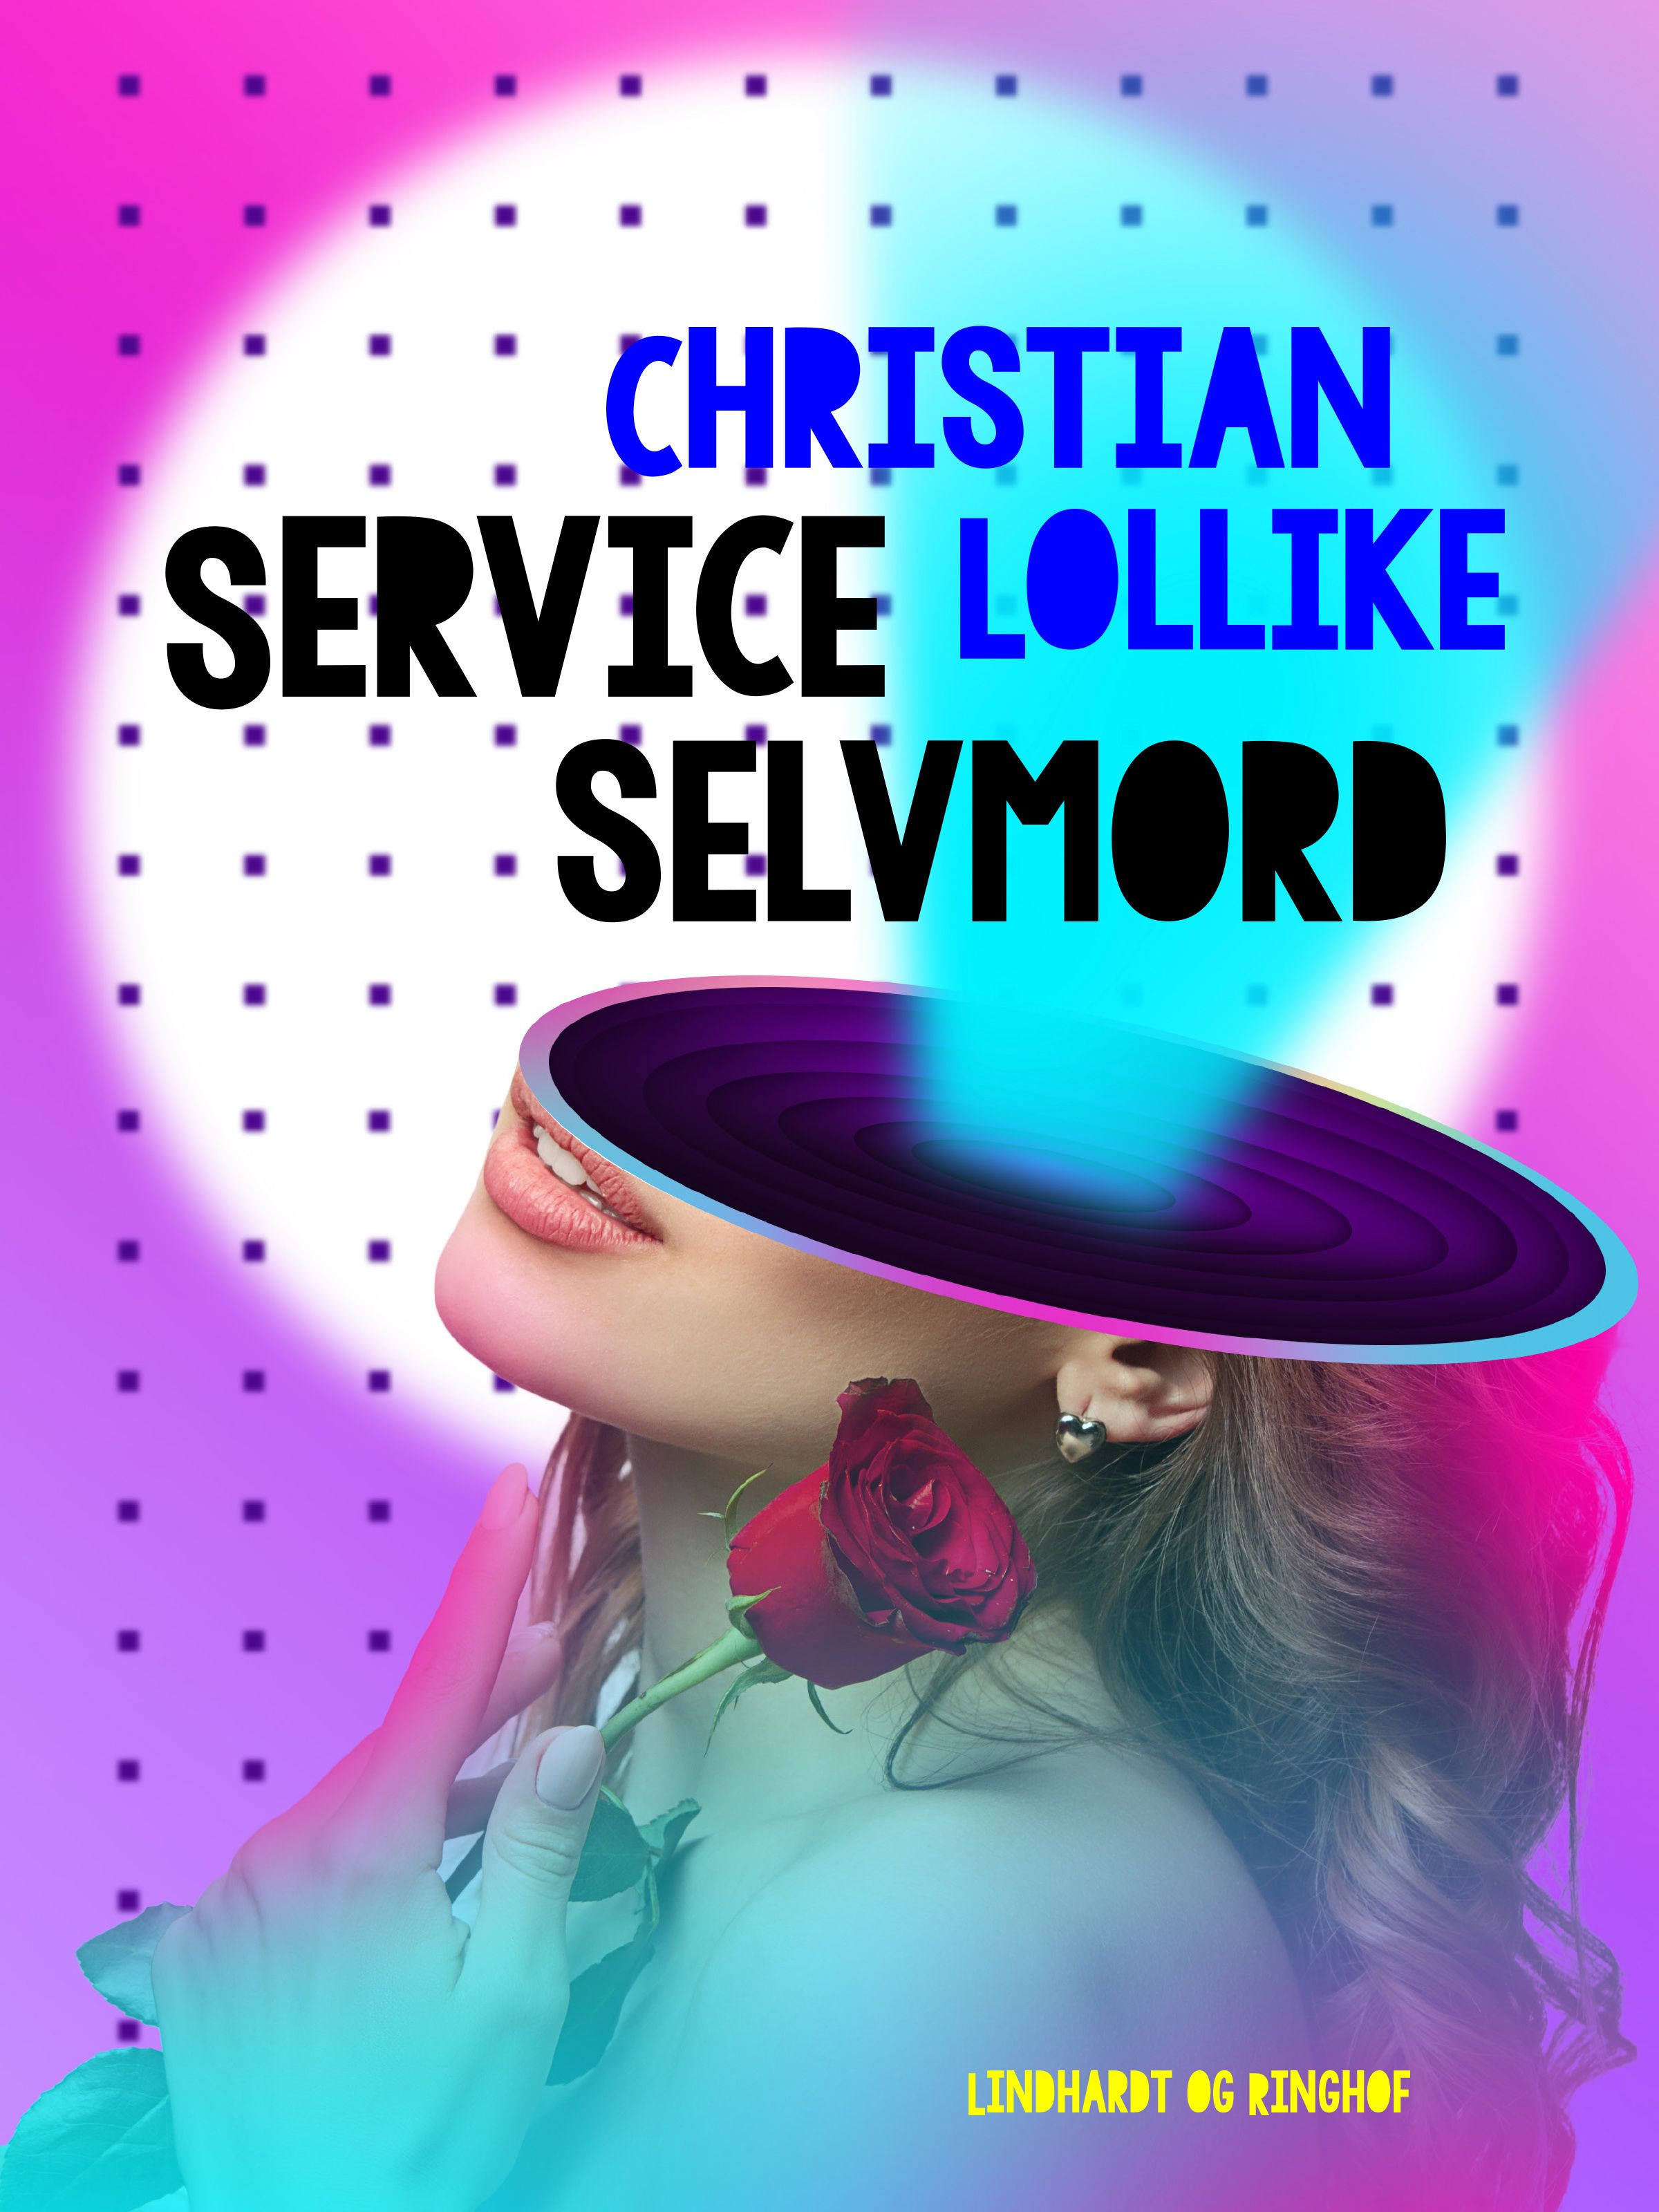 Service selvmord, eBook by Christian Lollike